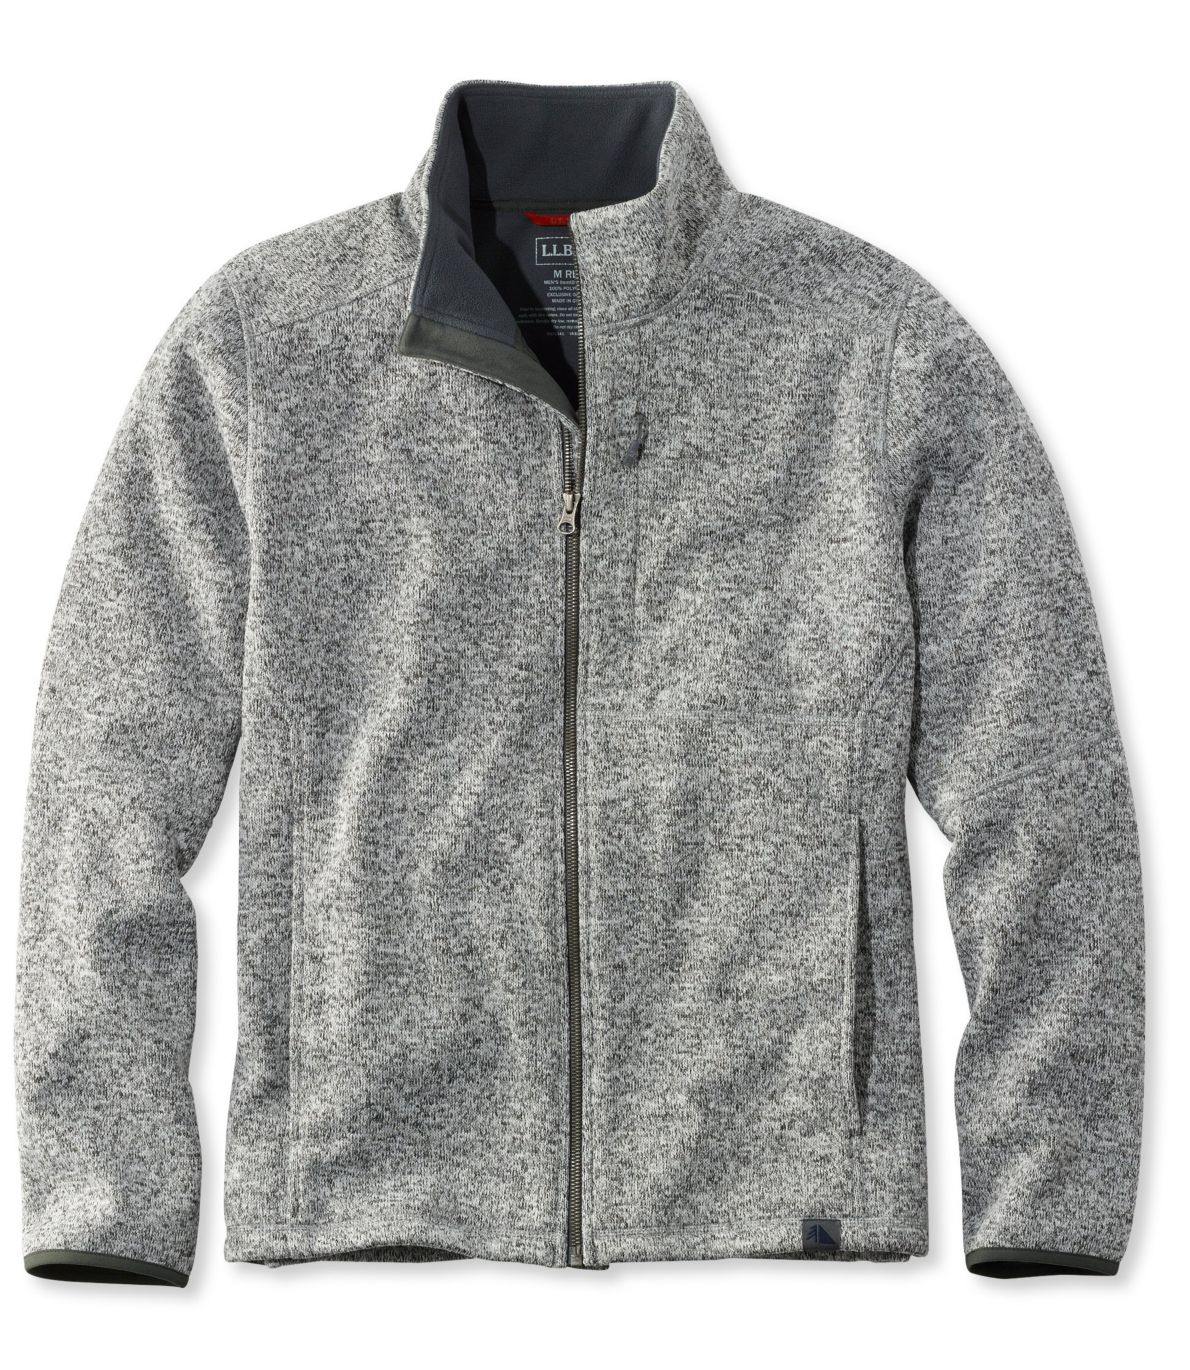 Windproof Sweater Fleece Jacket at L.L. Bean